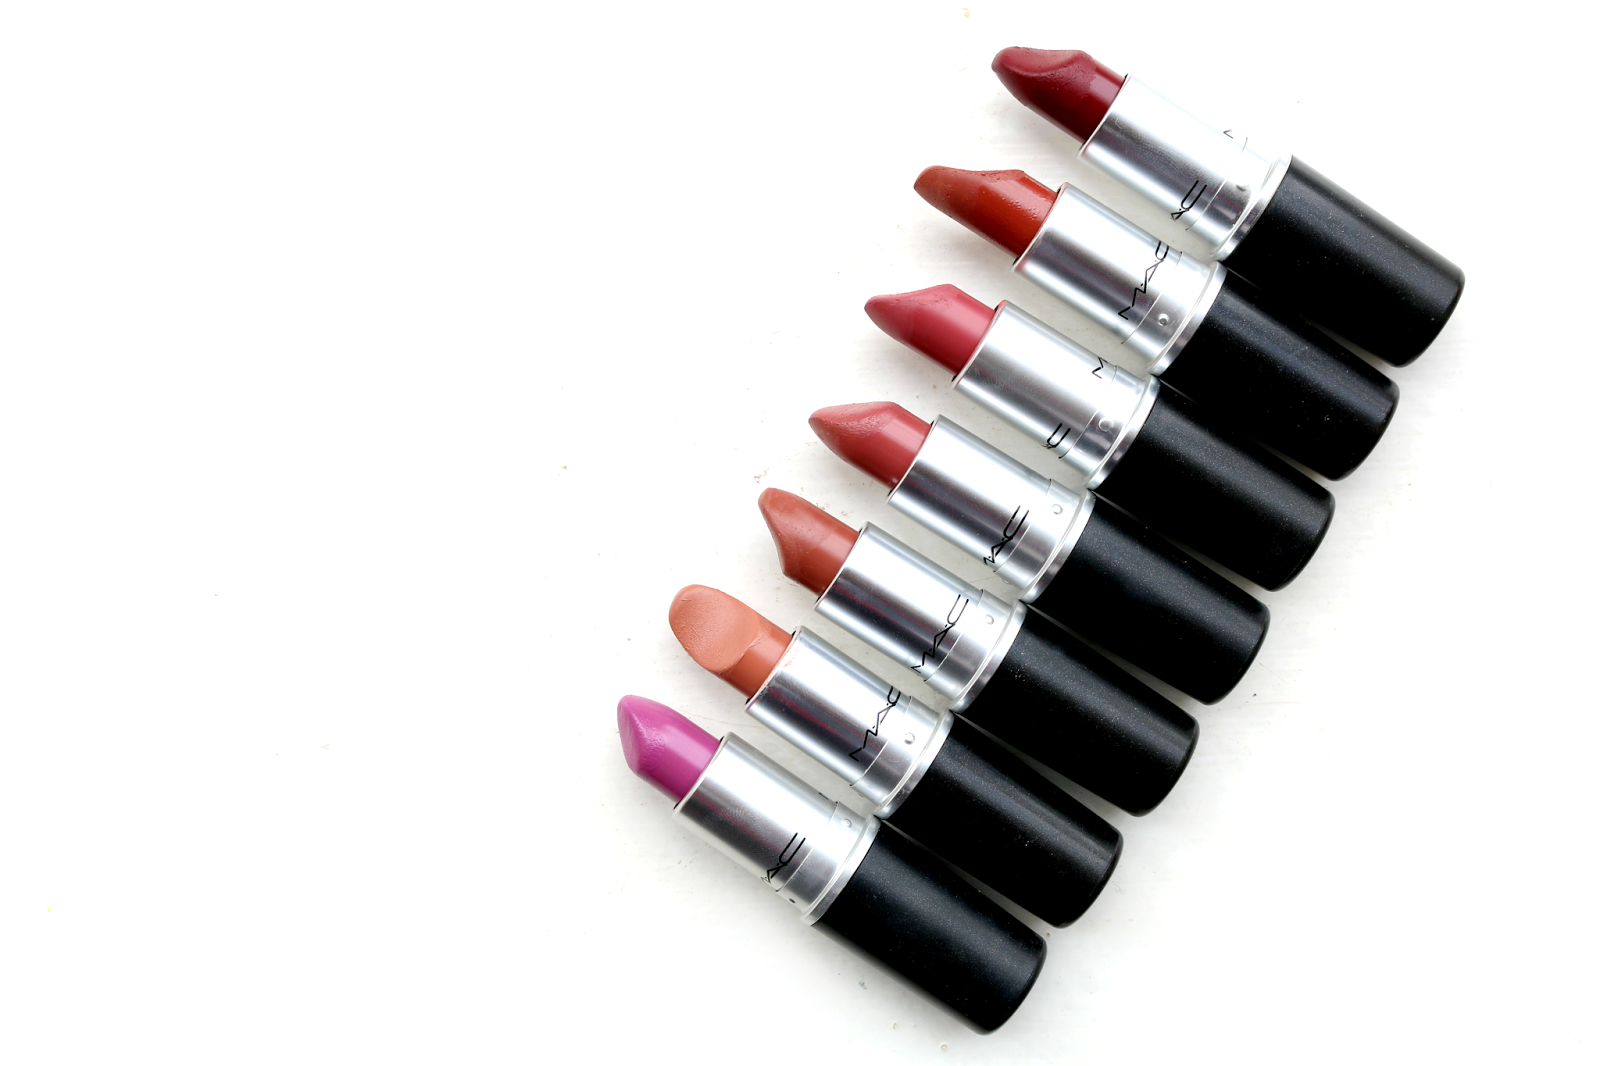 mac lip colors for fall 2015